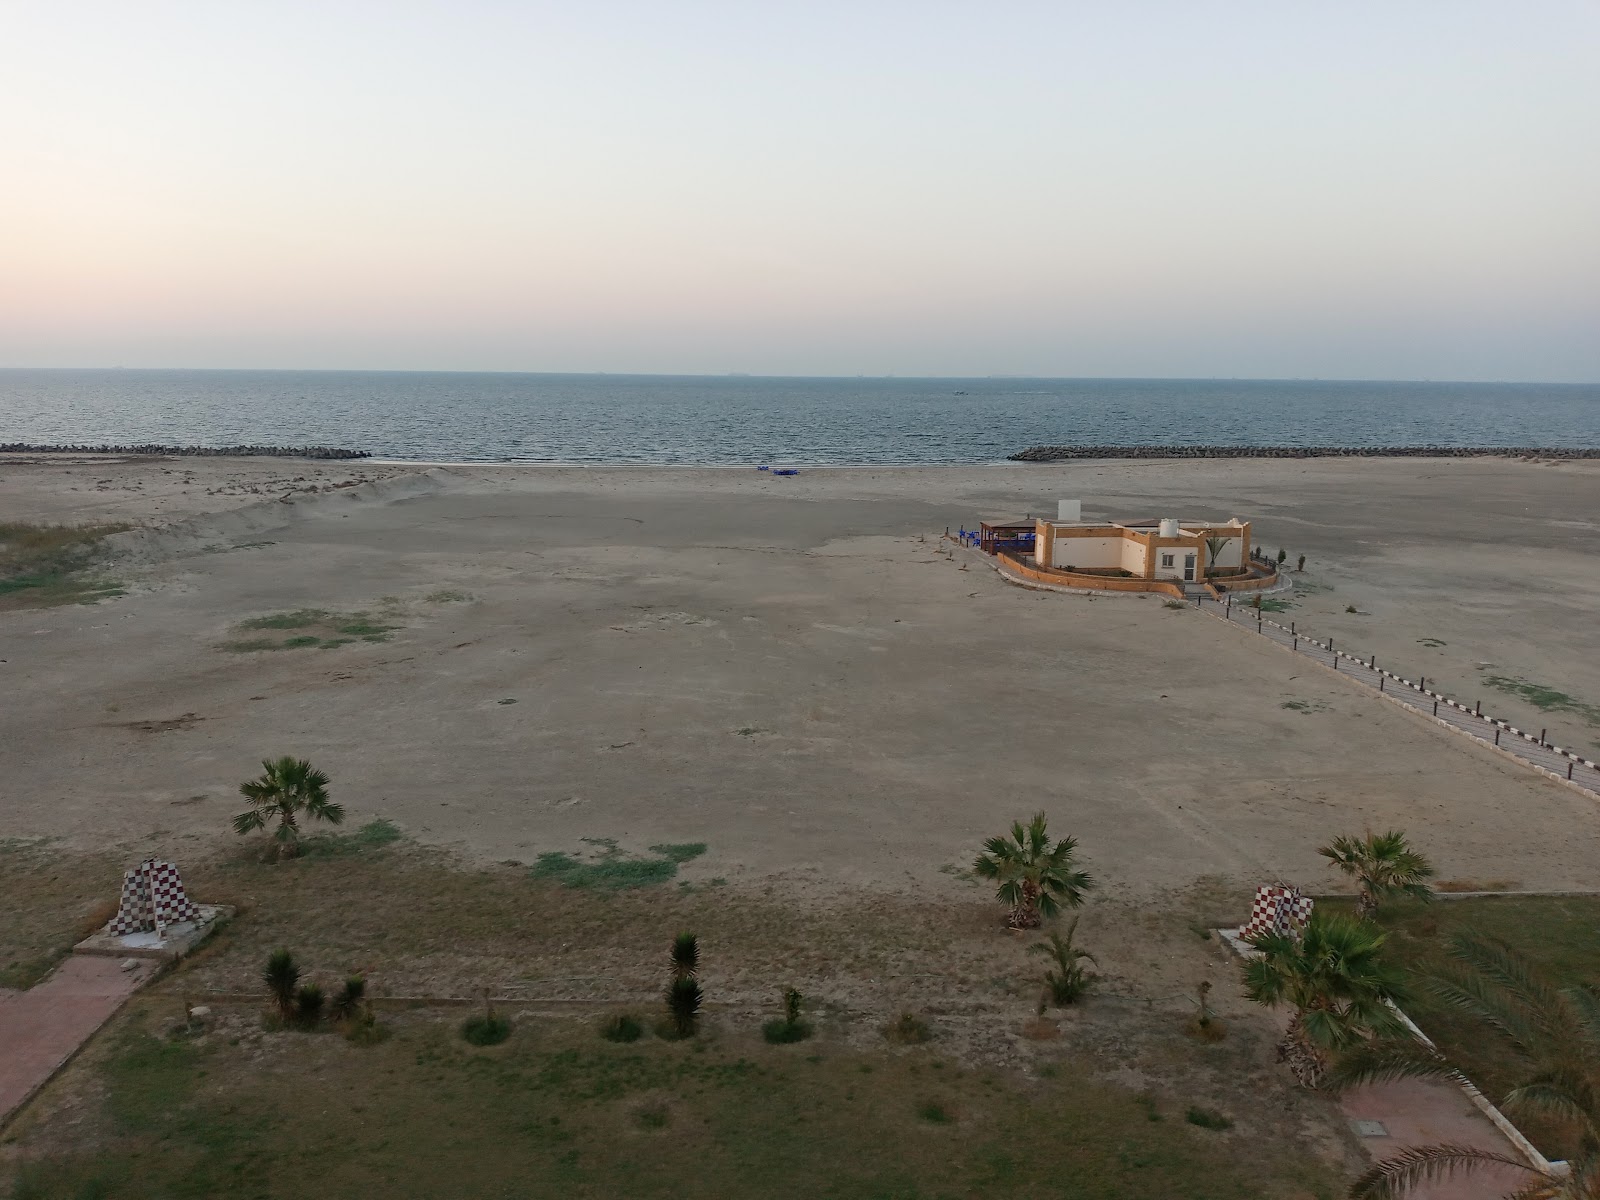 Foto di Al Abtal Beach con una superficie del sabbia luminosa